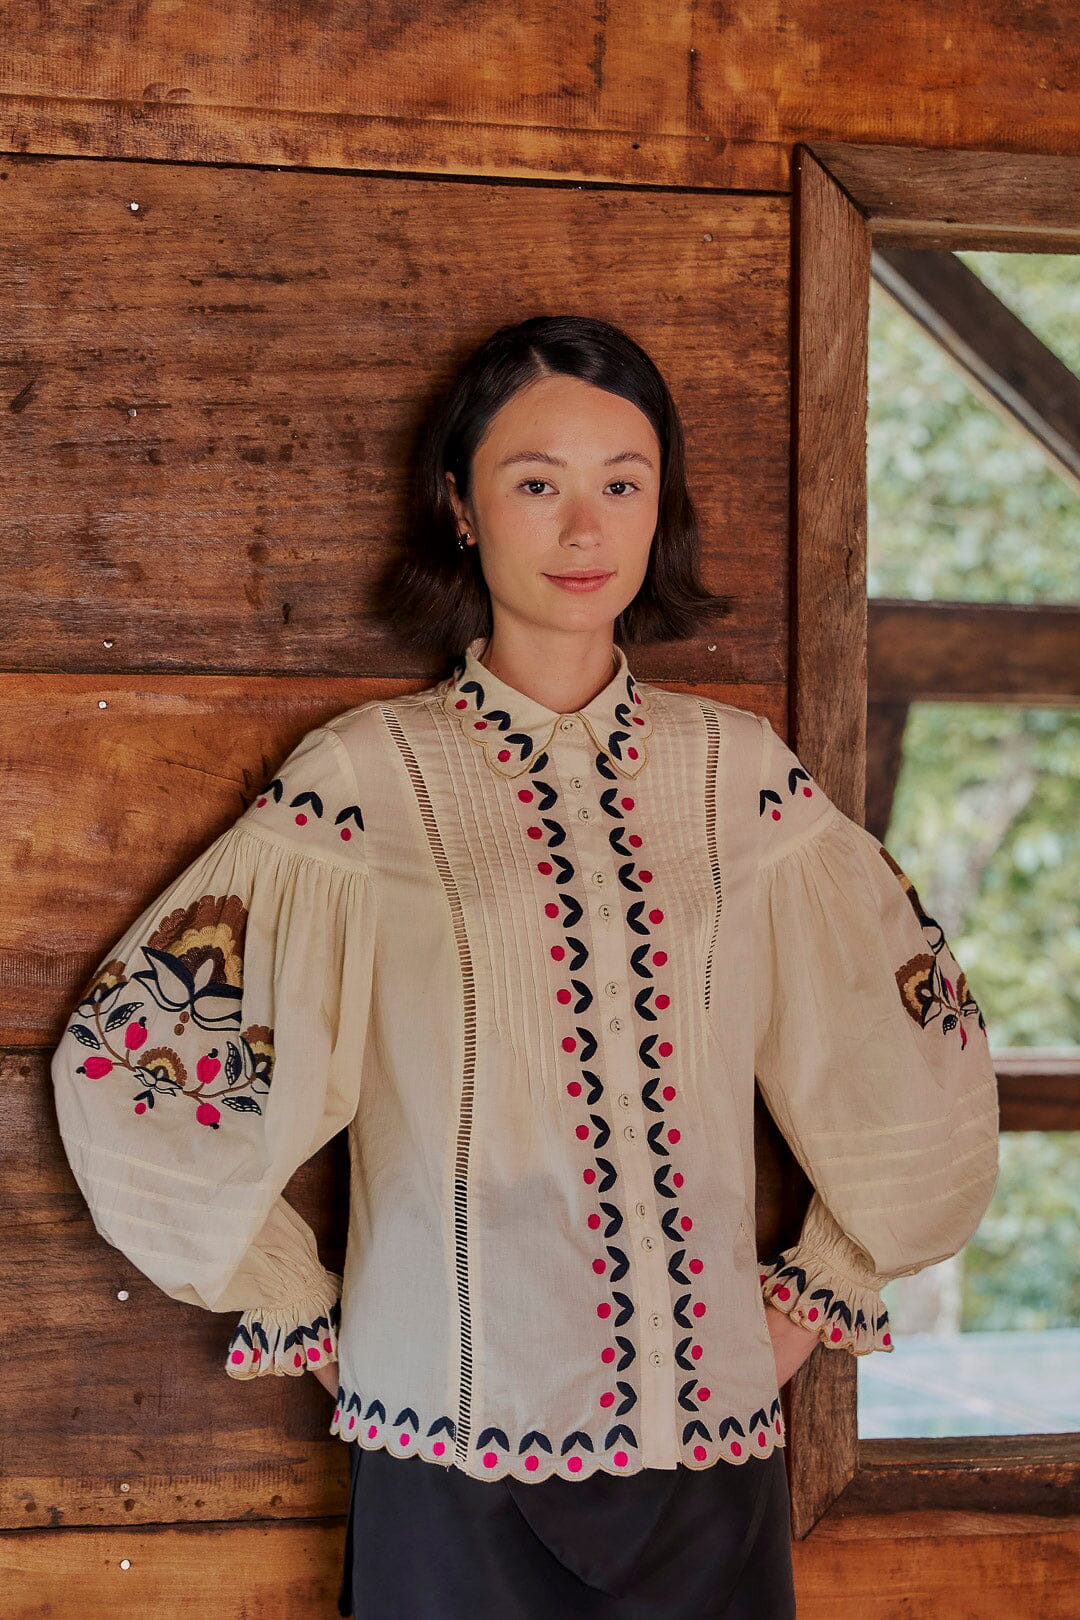 Khecari embroidered boho blouse